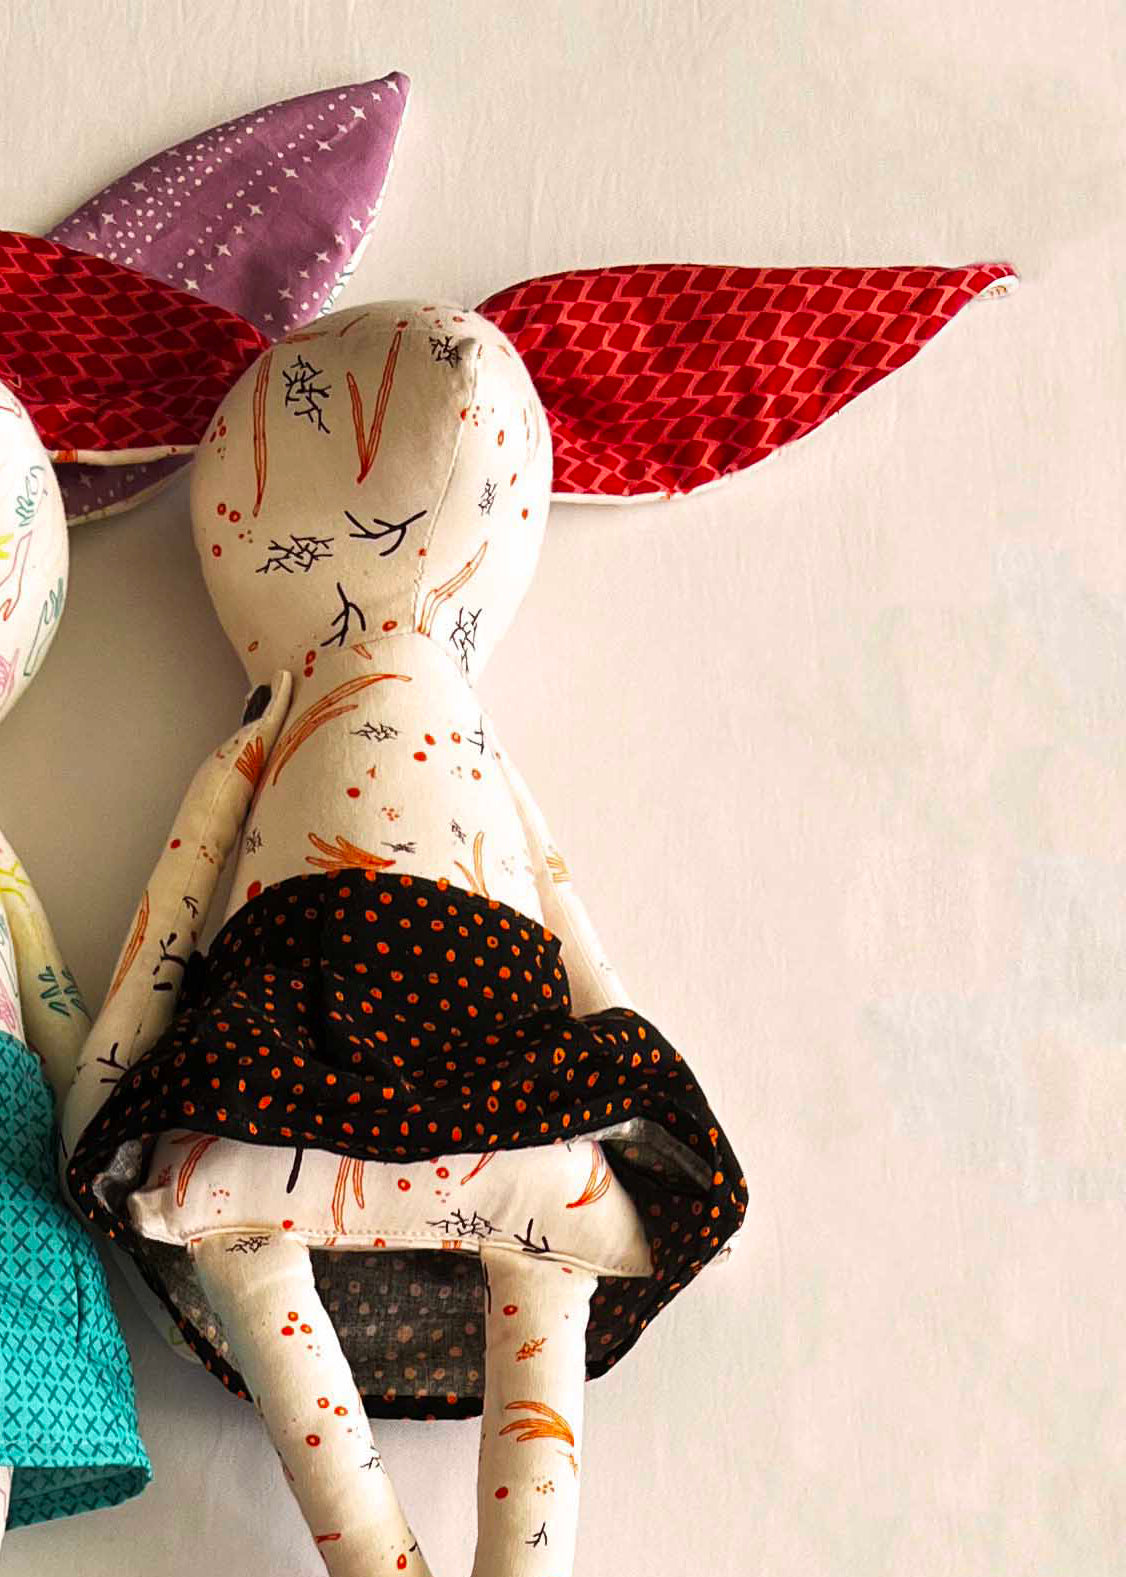 16" Bunny Rabbit Doll - Lights